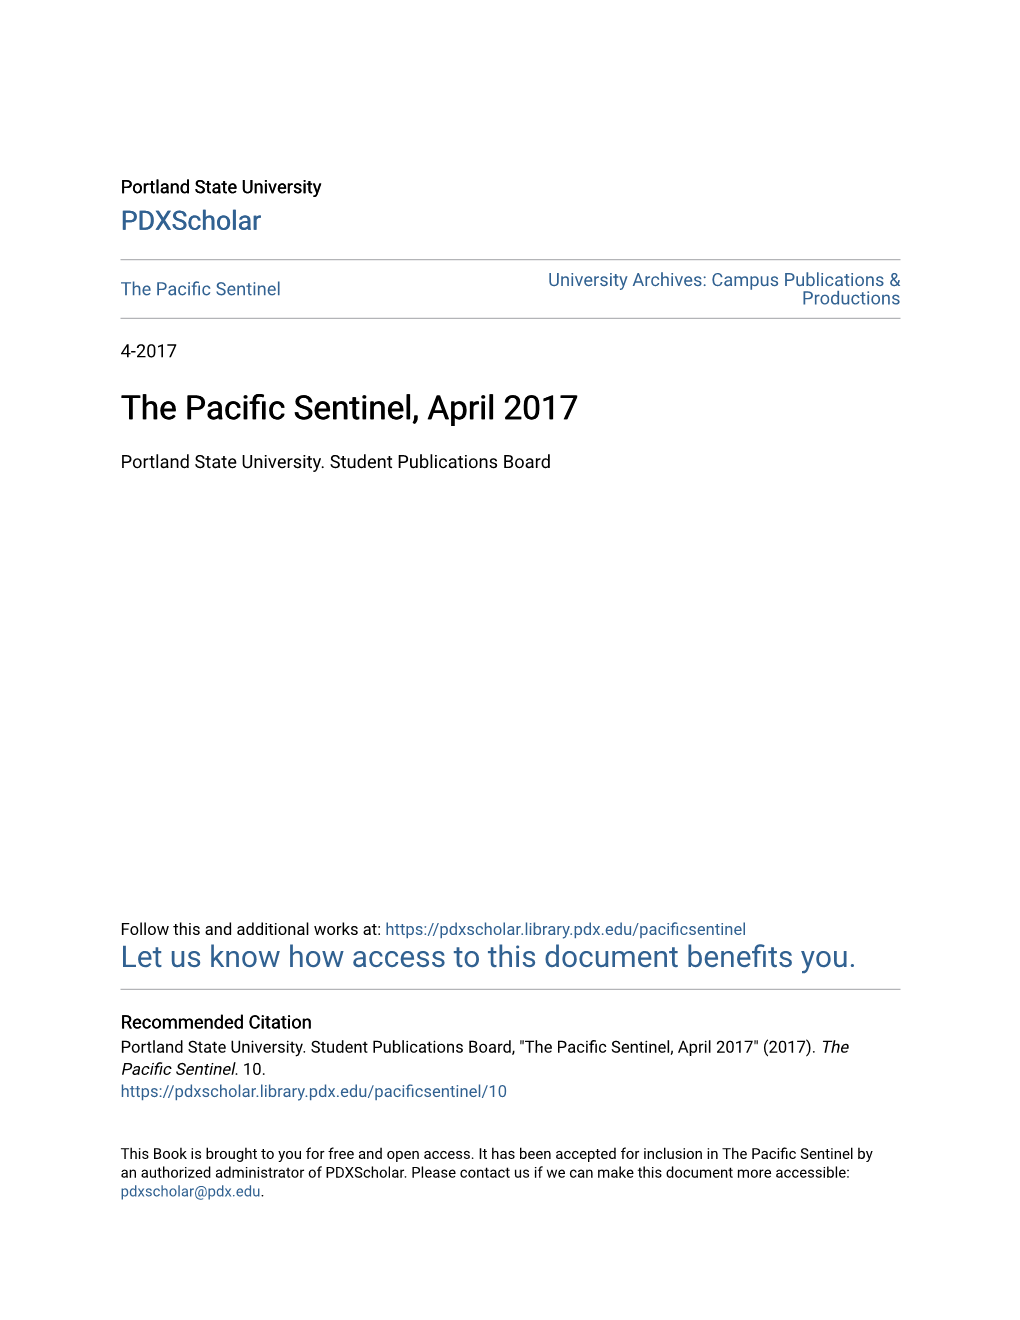 The Pacific Sentinel, April 2017